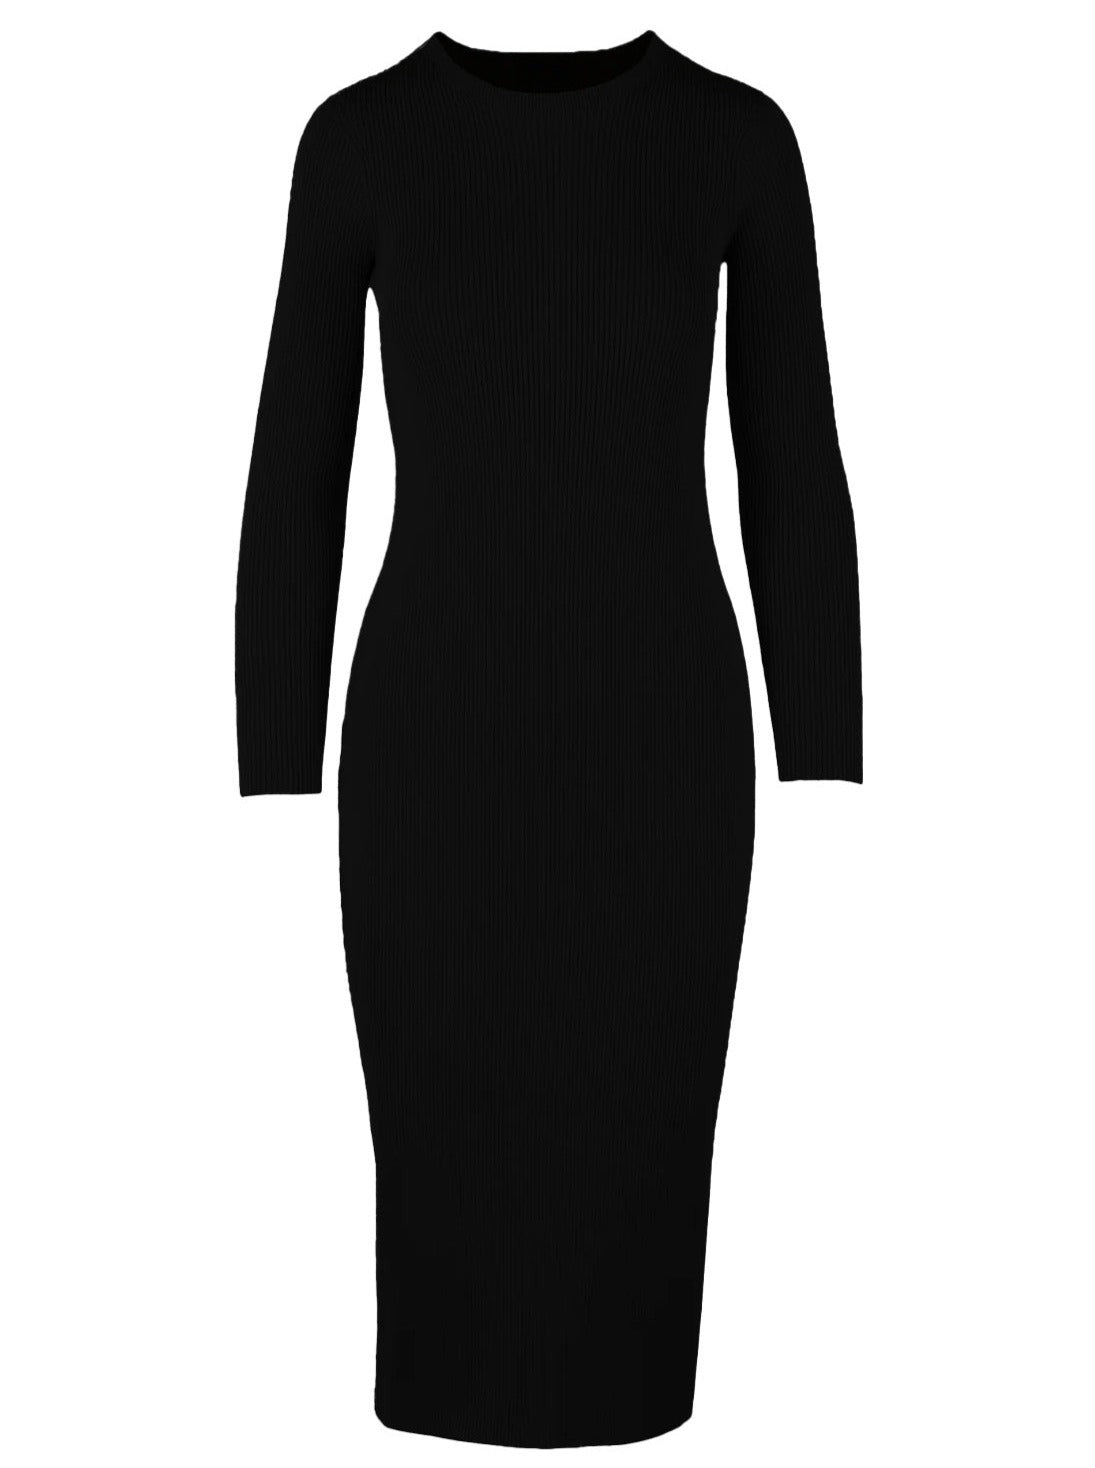 geneva long sleeve black knit dress